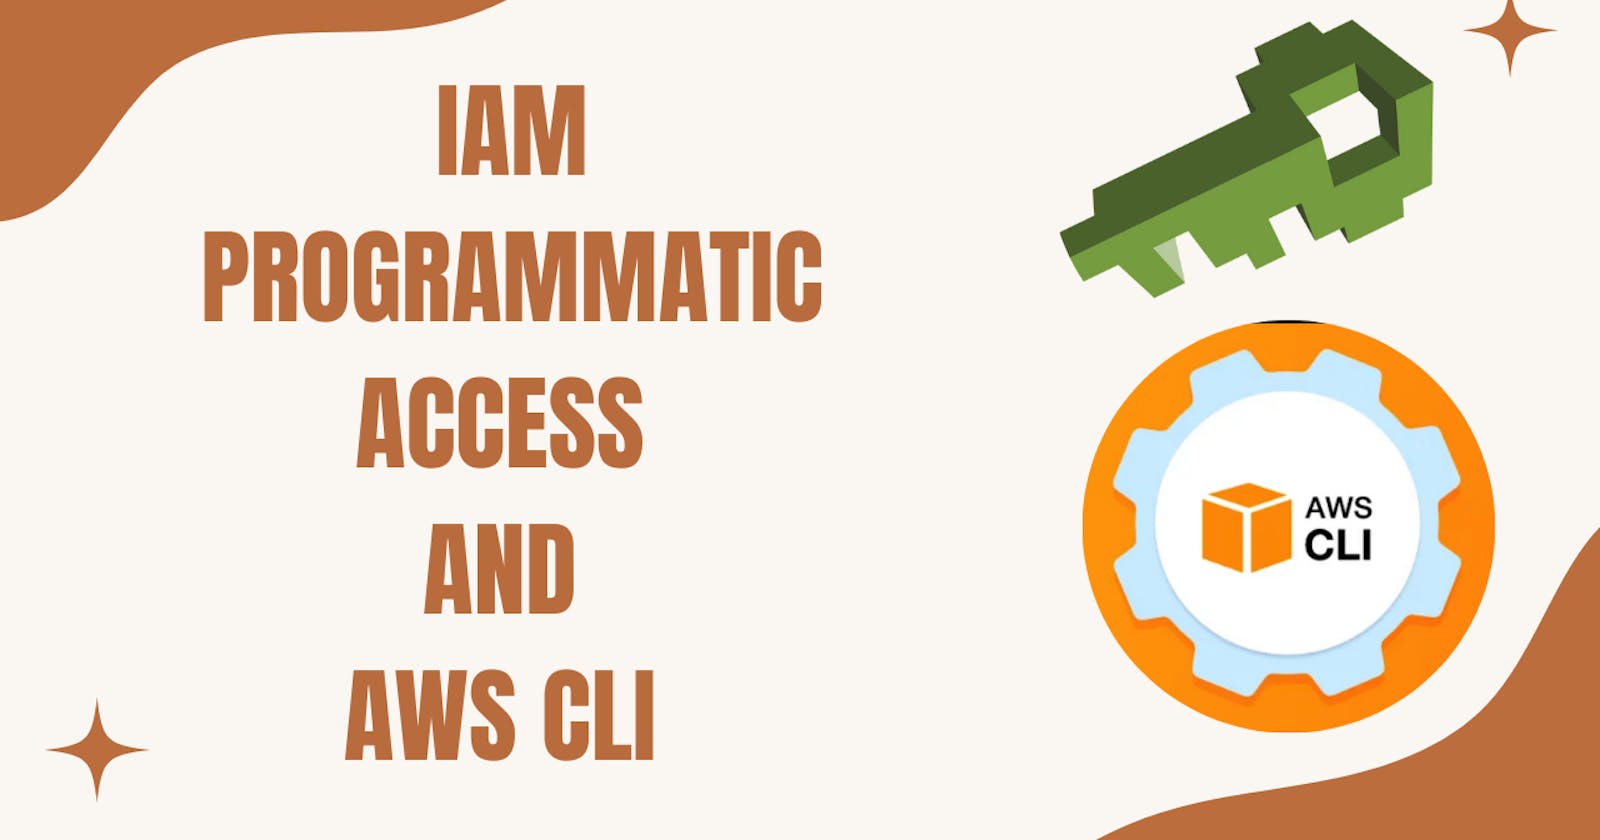 IAM Programmatic access and AWS CLI